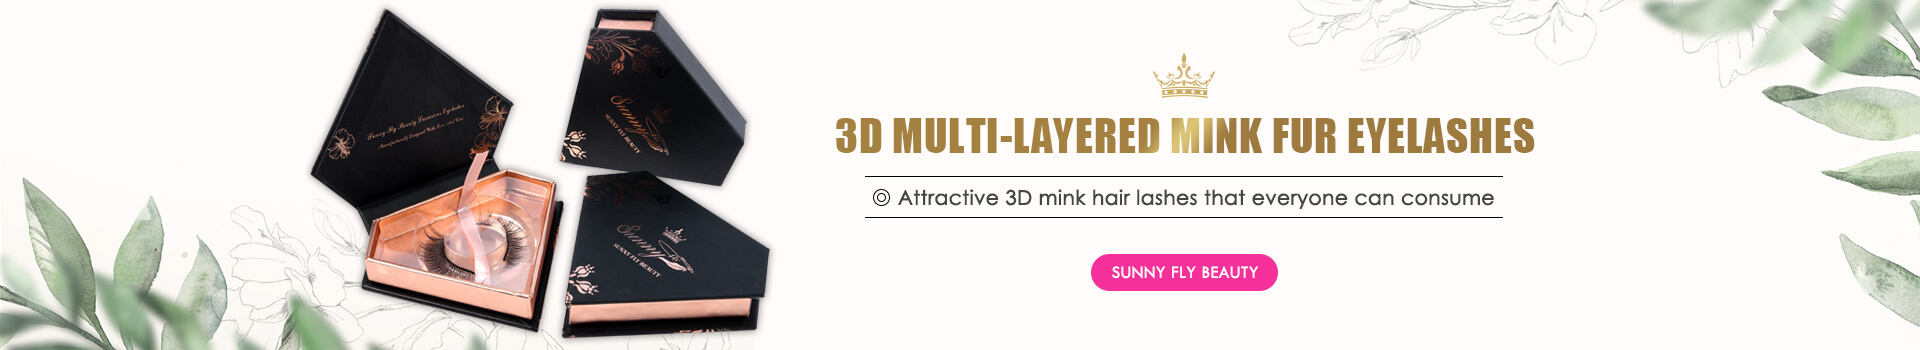 3D Multi-layered Mink Fur Eyelashes MG61